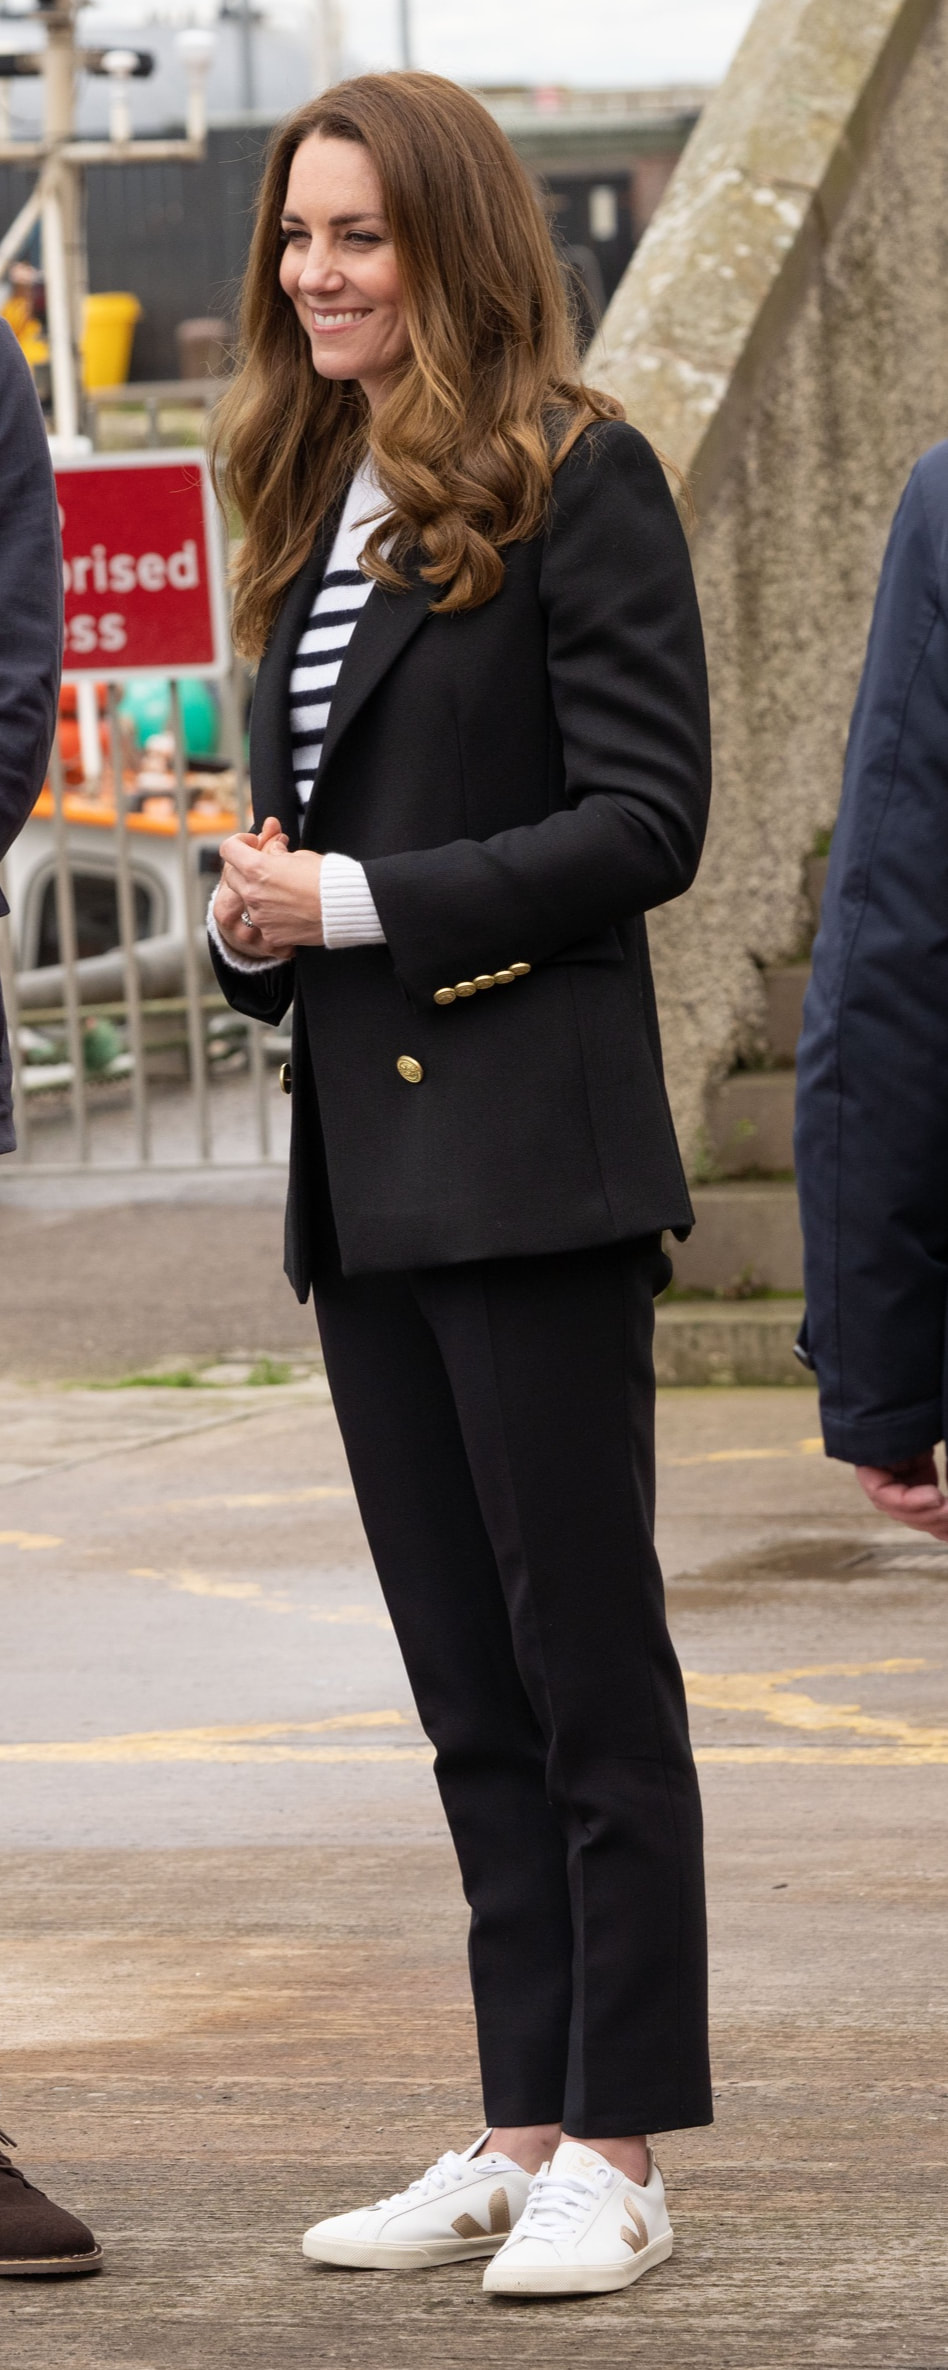 Veja Esplar Metallic-Trimmed Leather Sneakers as seen on Kate Middleton, The Duchess of Cambridge.